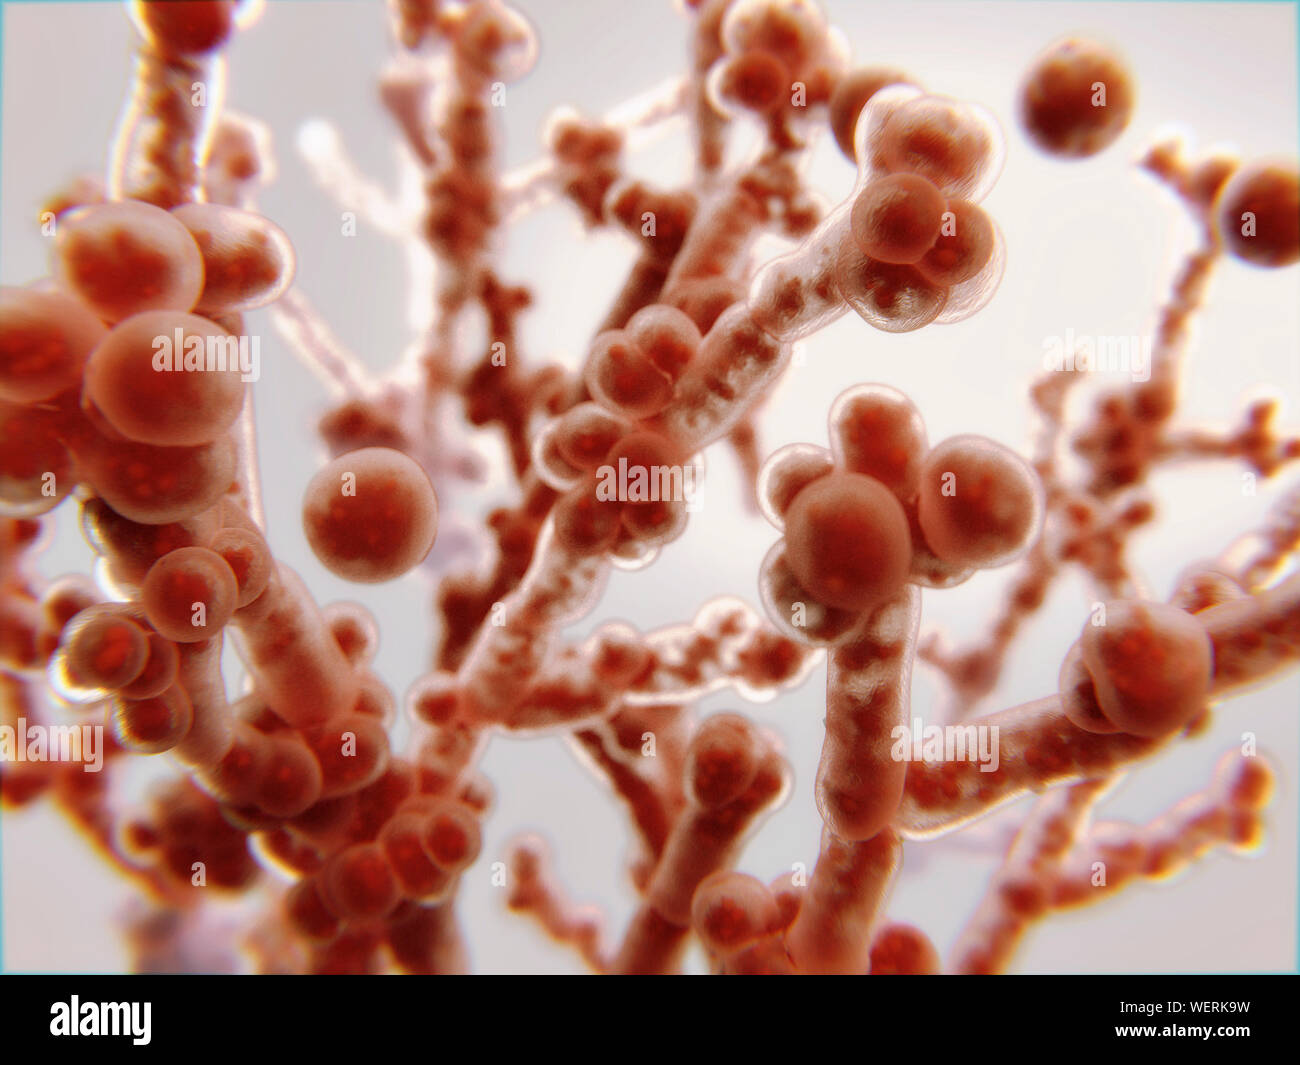 Candida albicans fungus, illustration Stock Photo